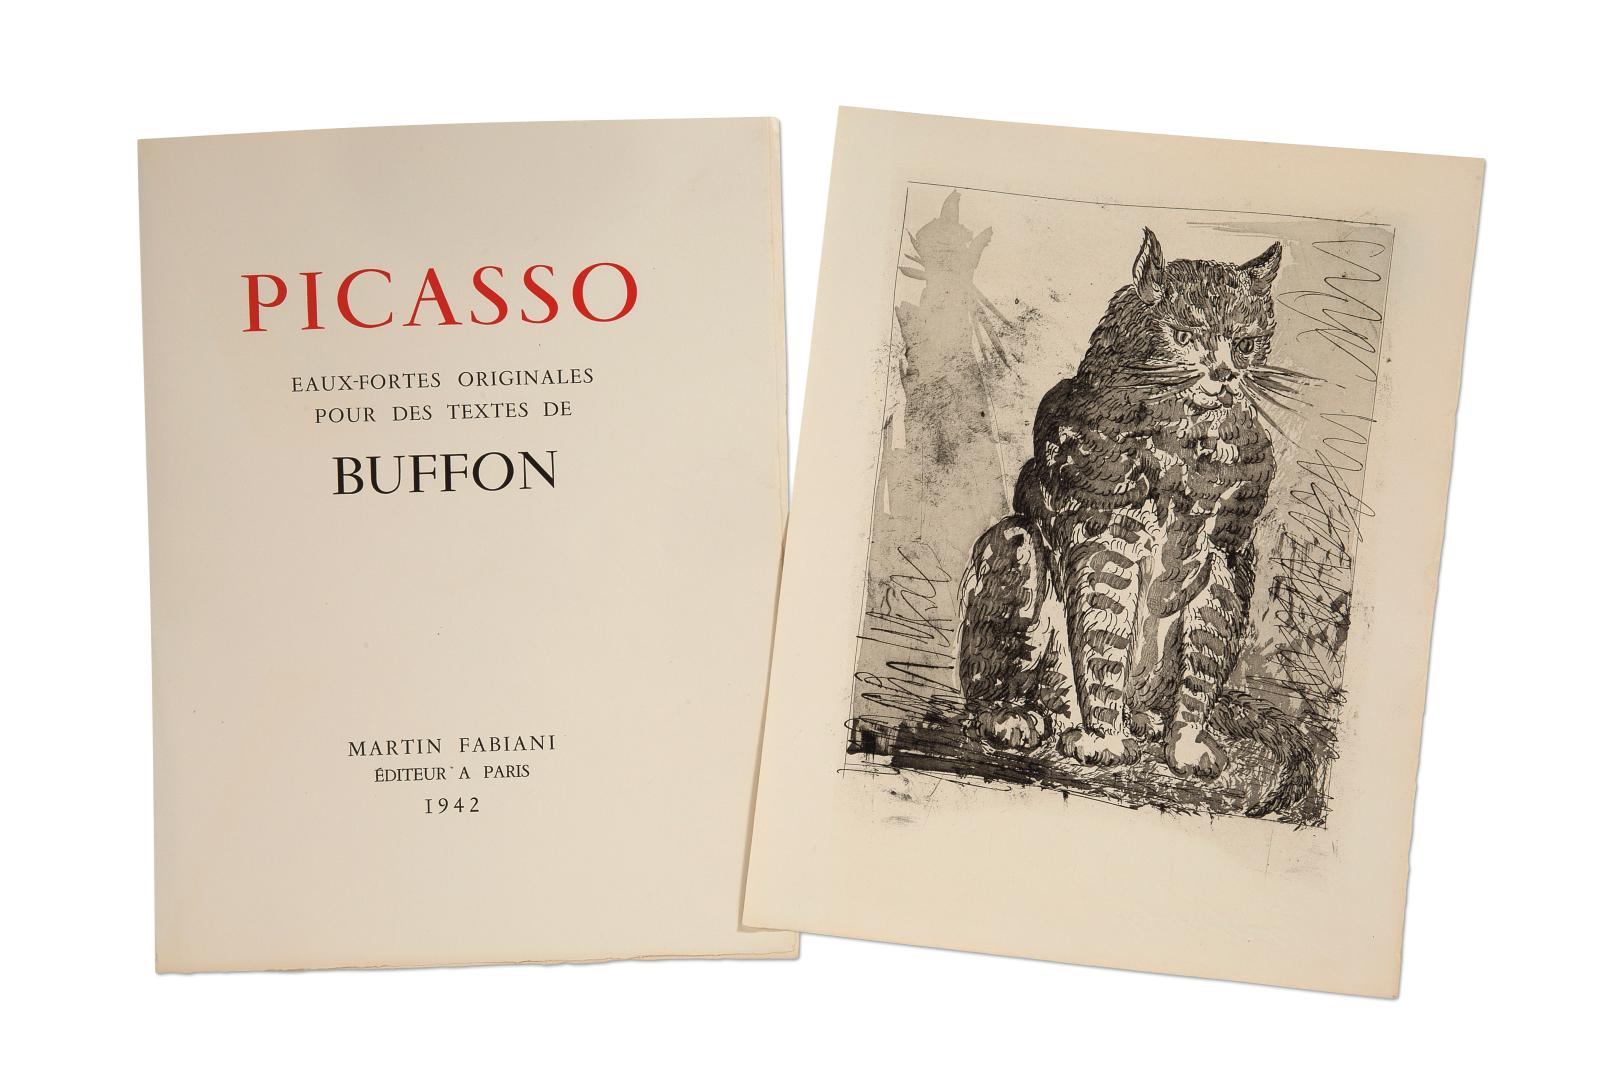 Picasso et Buffon